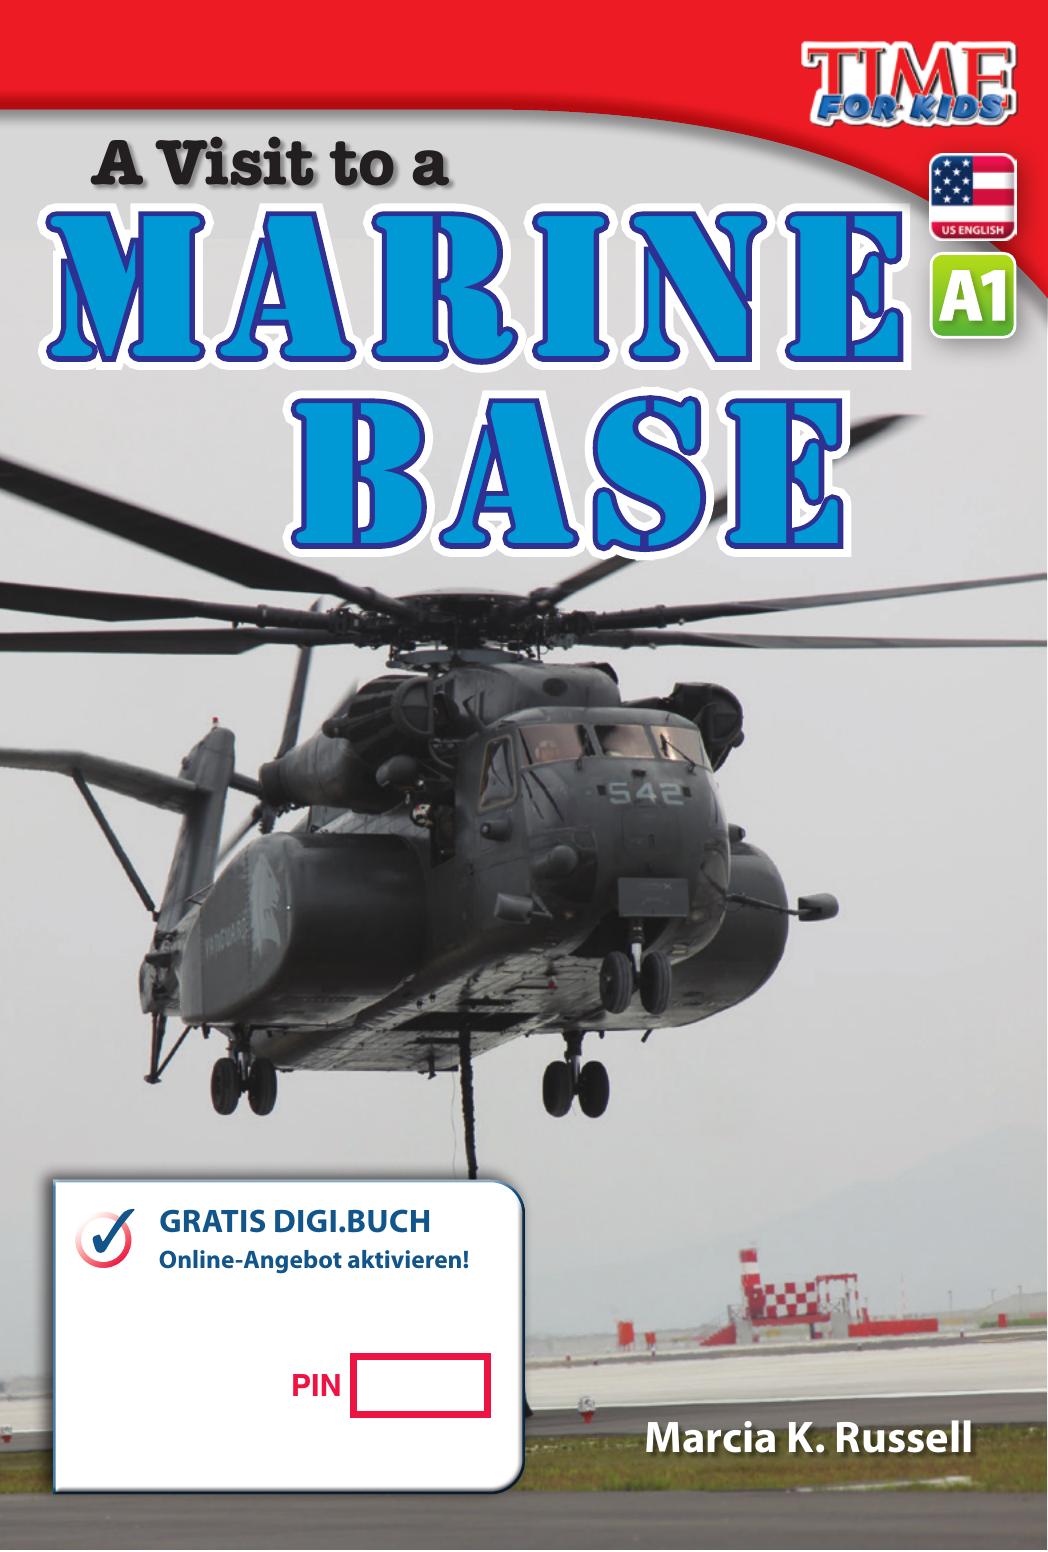 A1 – A Visit to a Marine Base